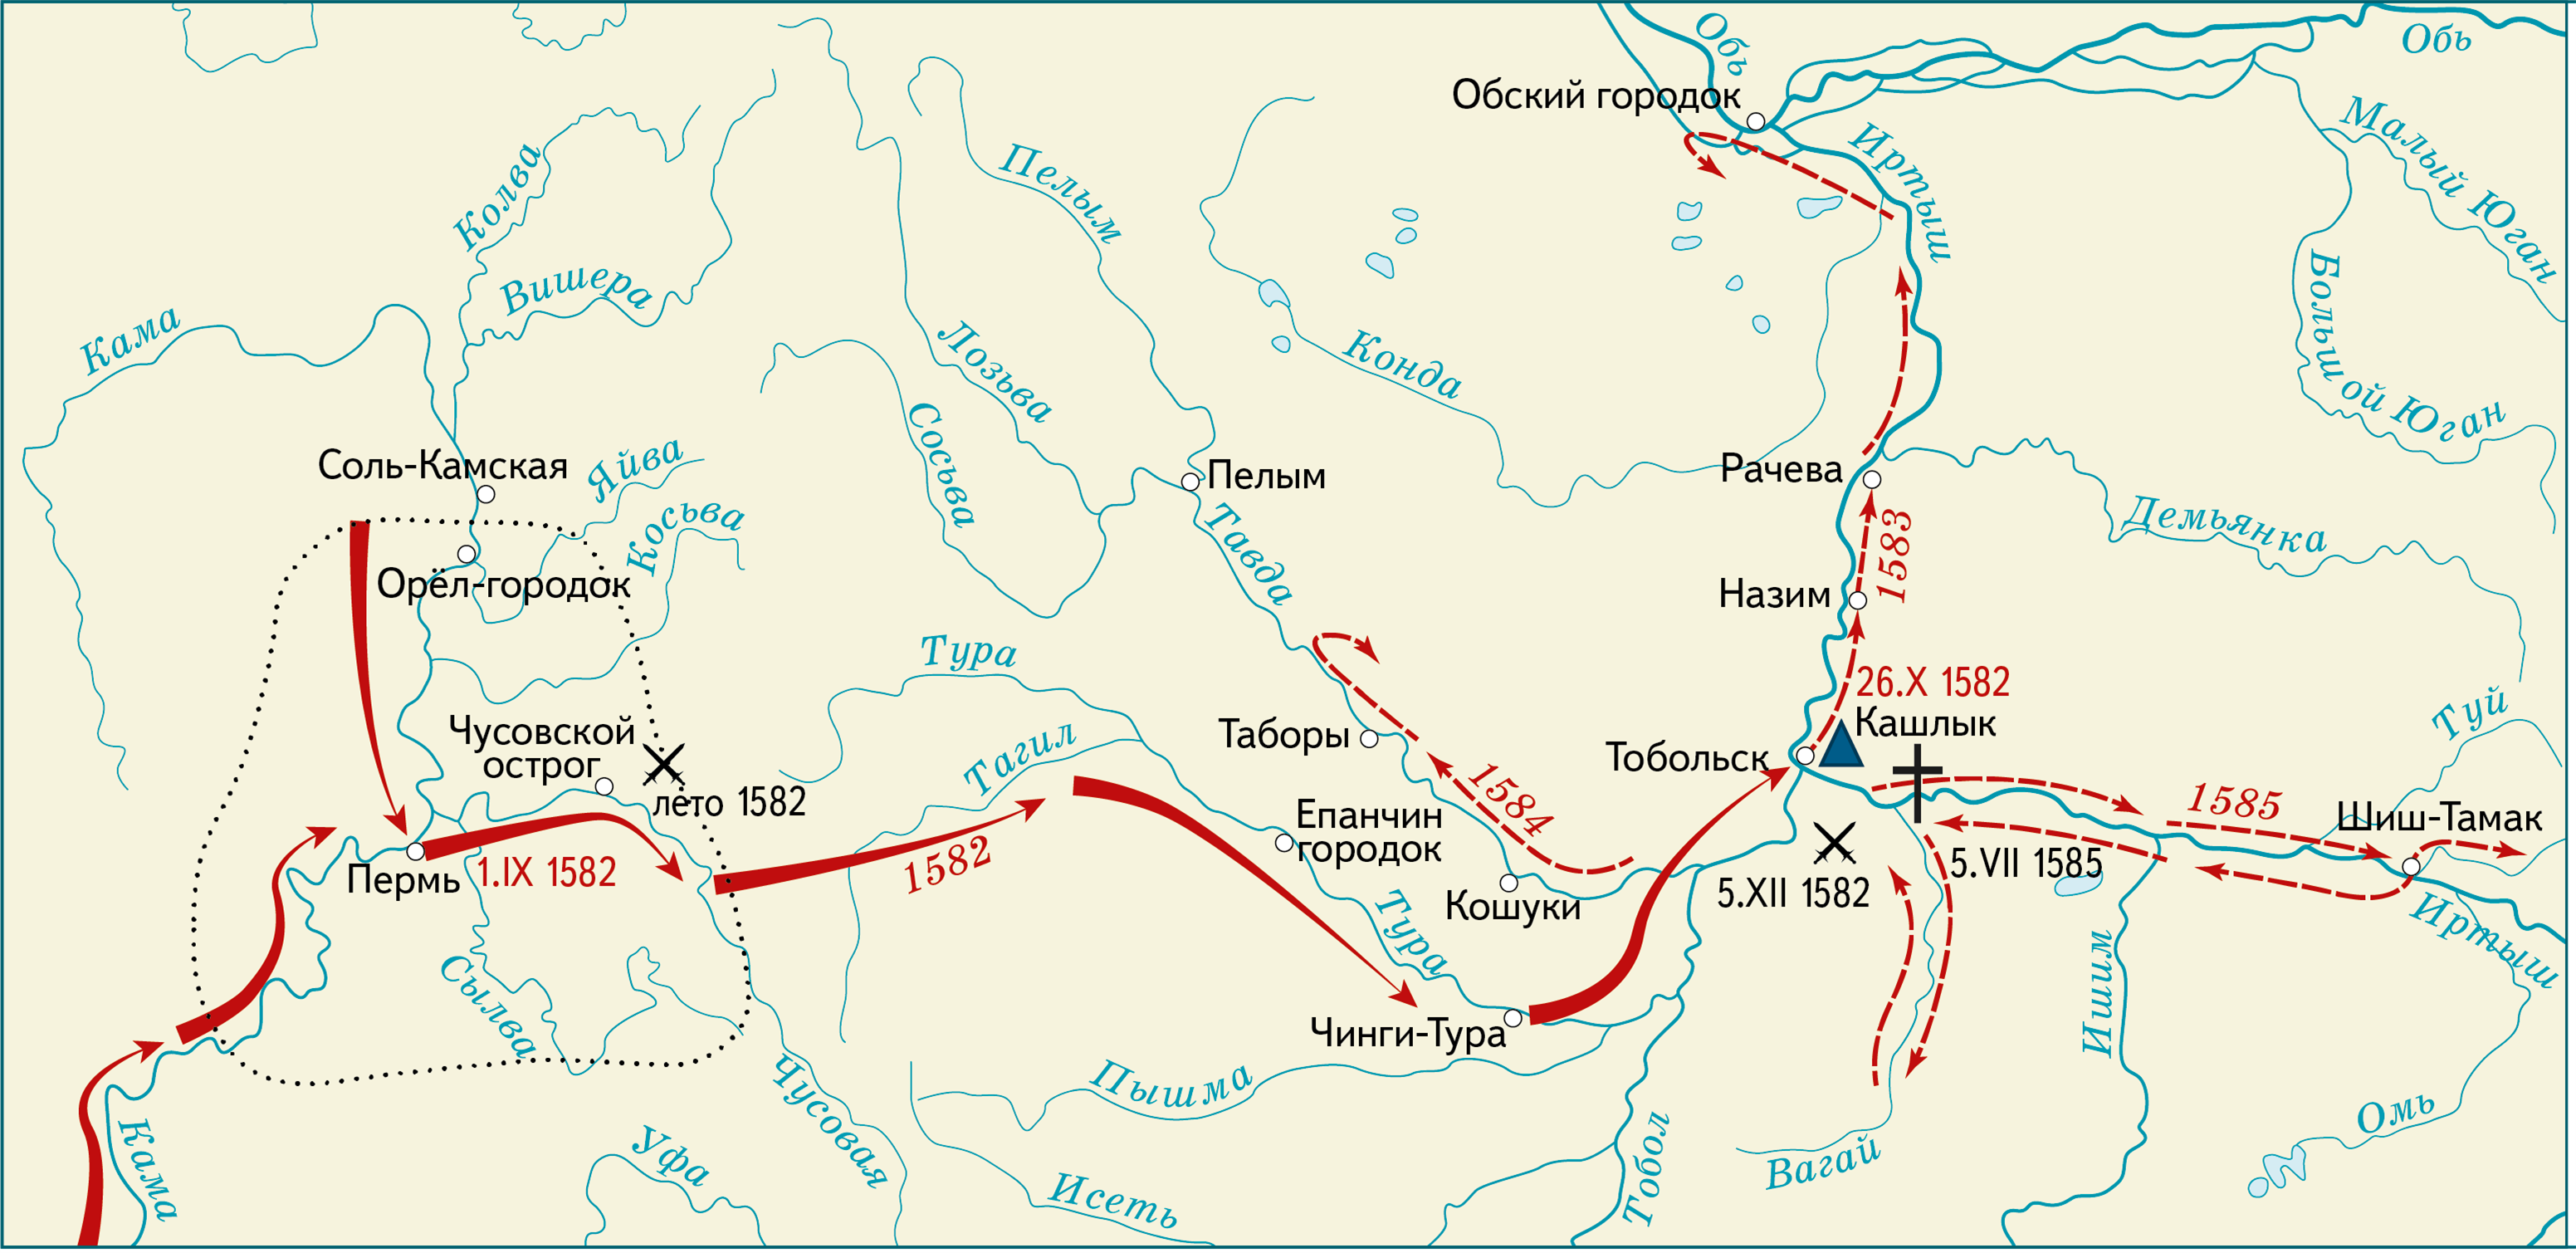 Поход Ермака в Сибирь 1581-1585. 1581 Поход Ермака в Сибирь. Карта поход Ермака в Сибирь 1581. Где живет хана